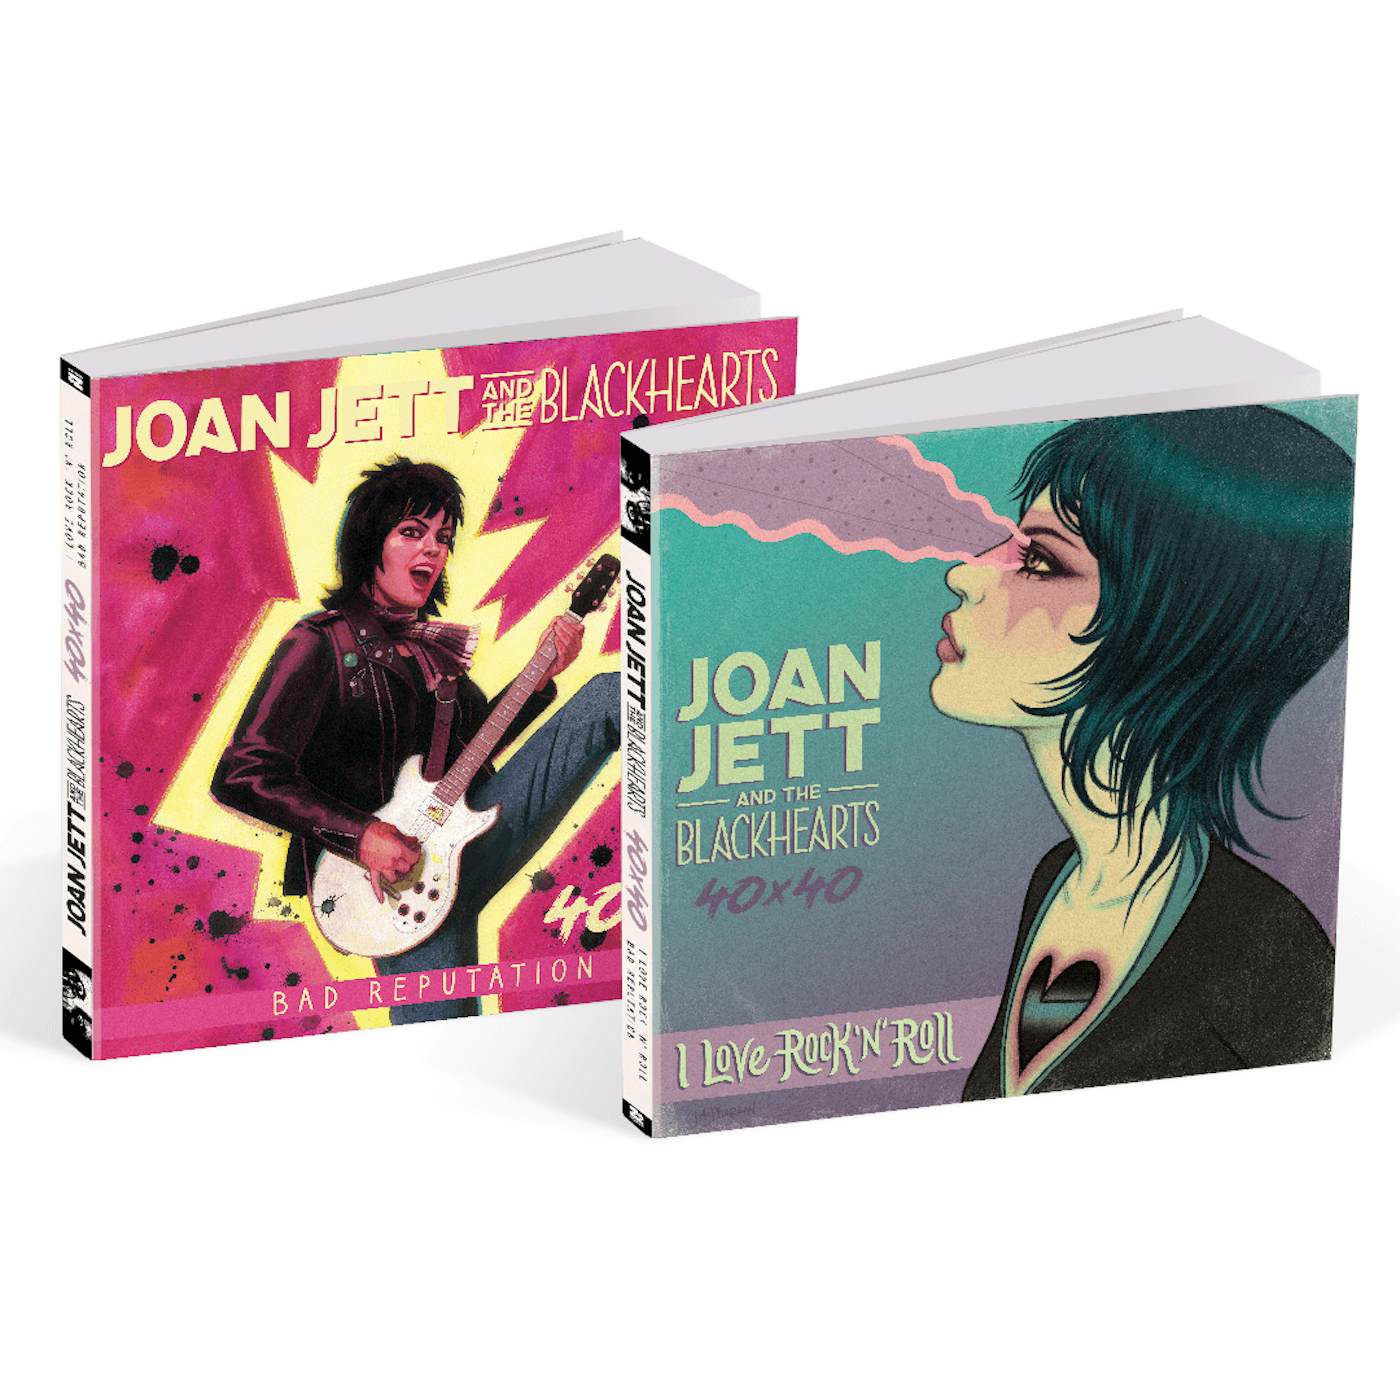 JOAN JETT & THE BLACKHEARTS - 40x40: Bad Reputation/I Love Rock 'n' Roll - Hardcover Book